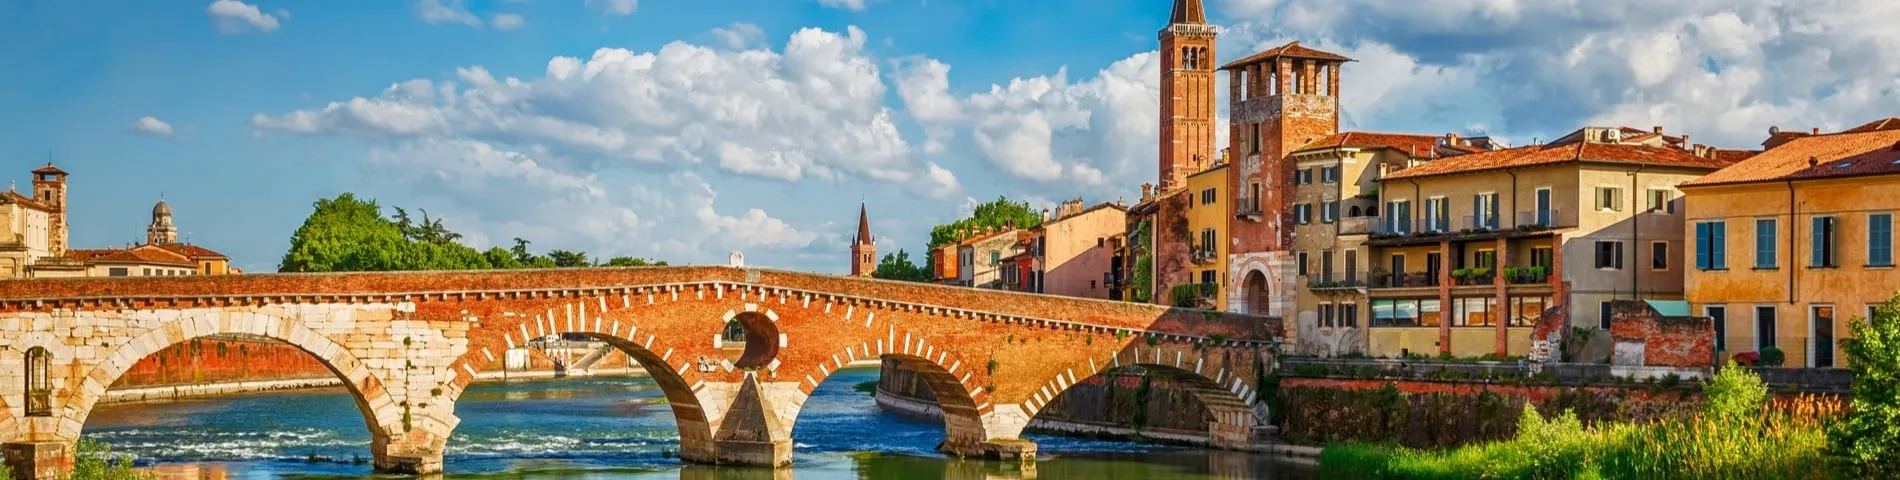 Verona - 